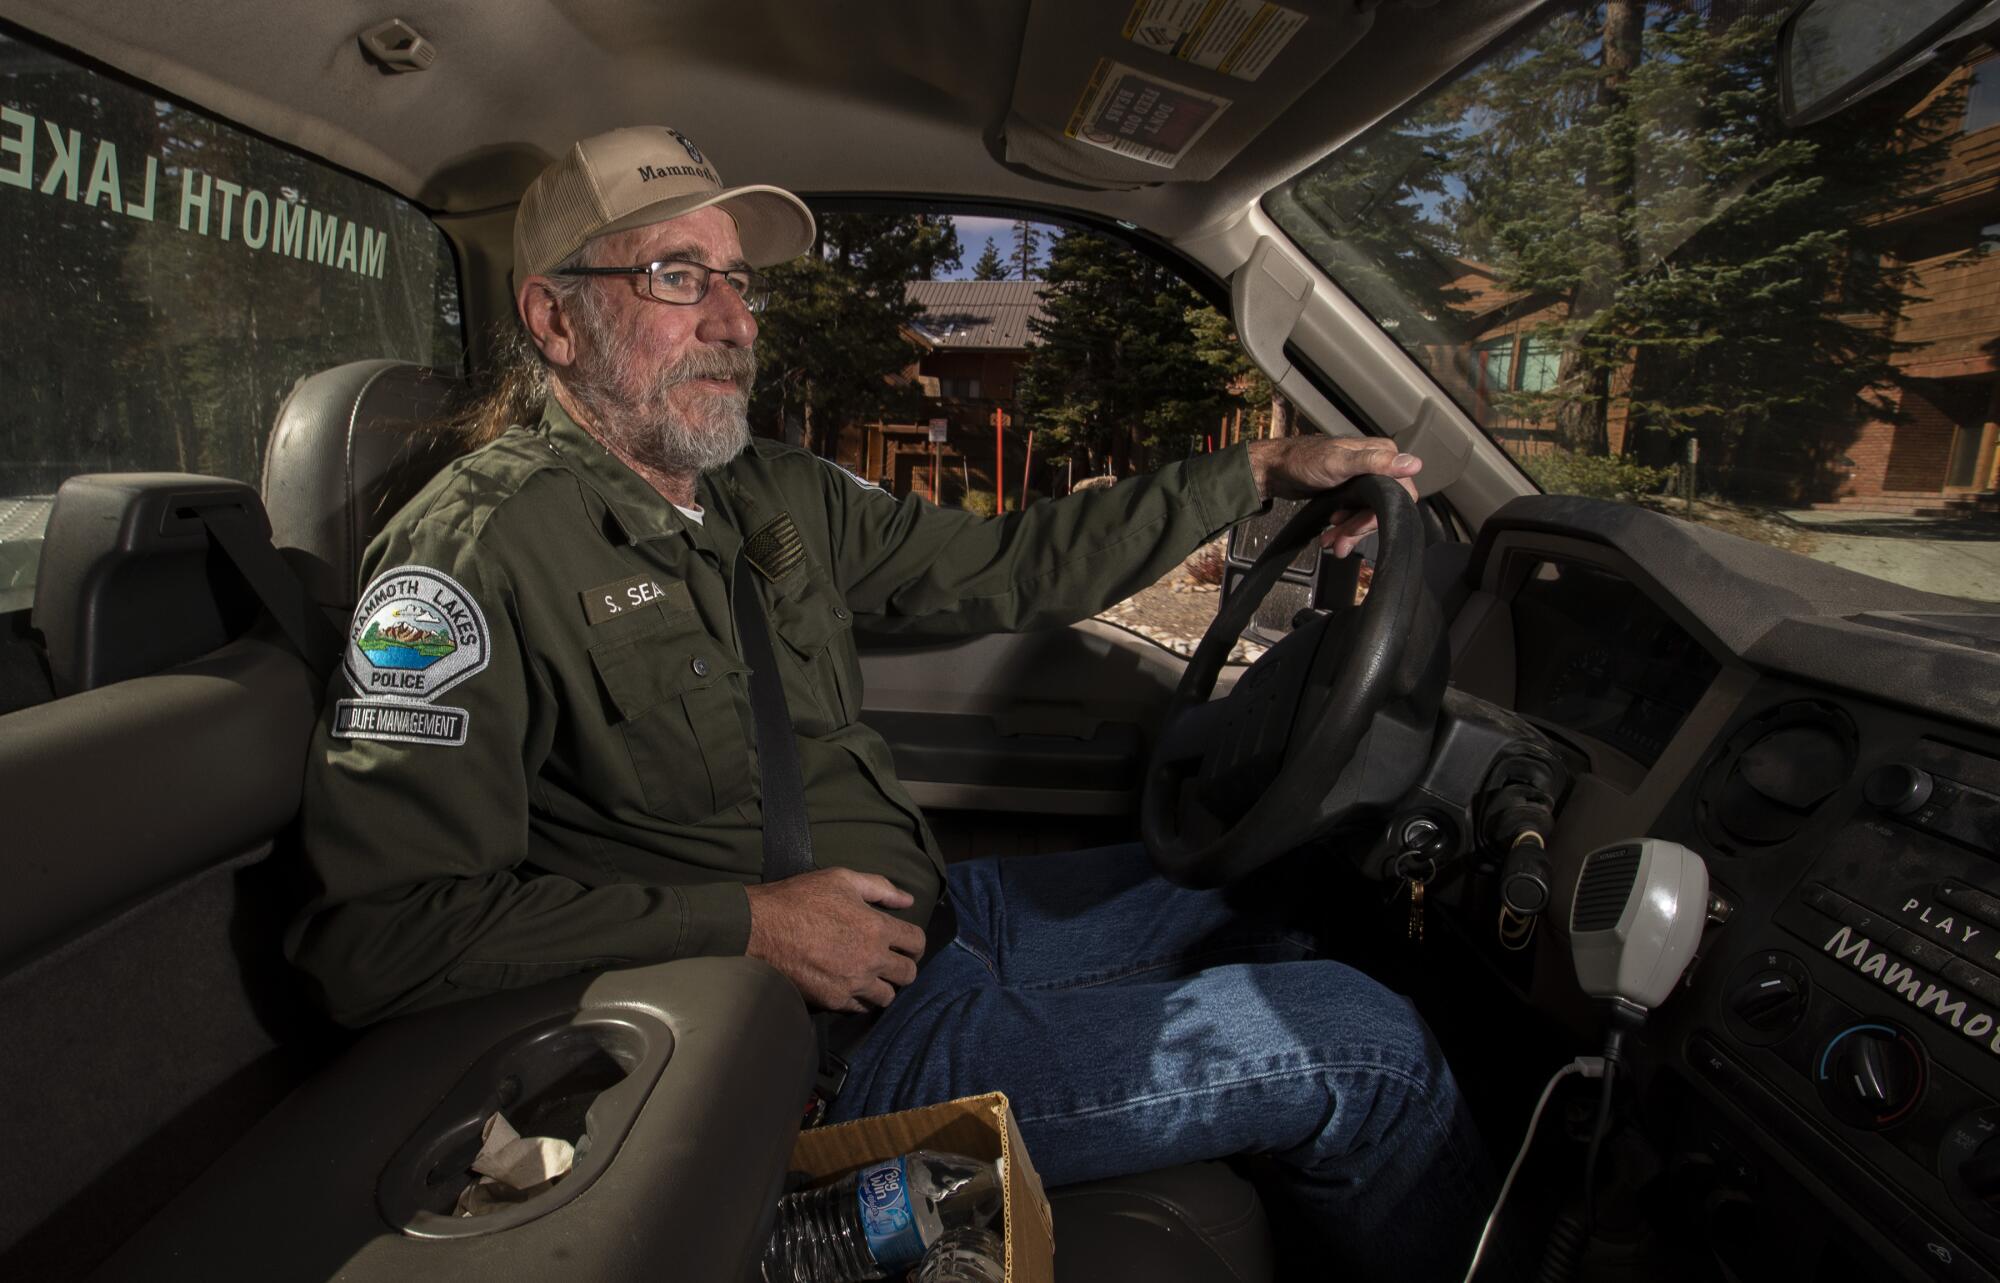 "Bear whisperer" Steve Searles patrols the town of Mammoth Lakes.